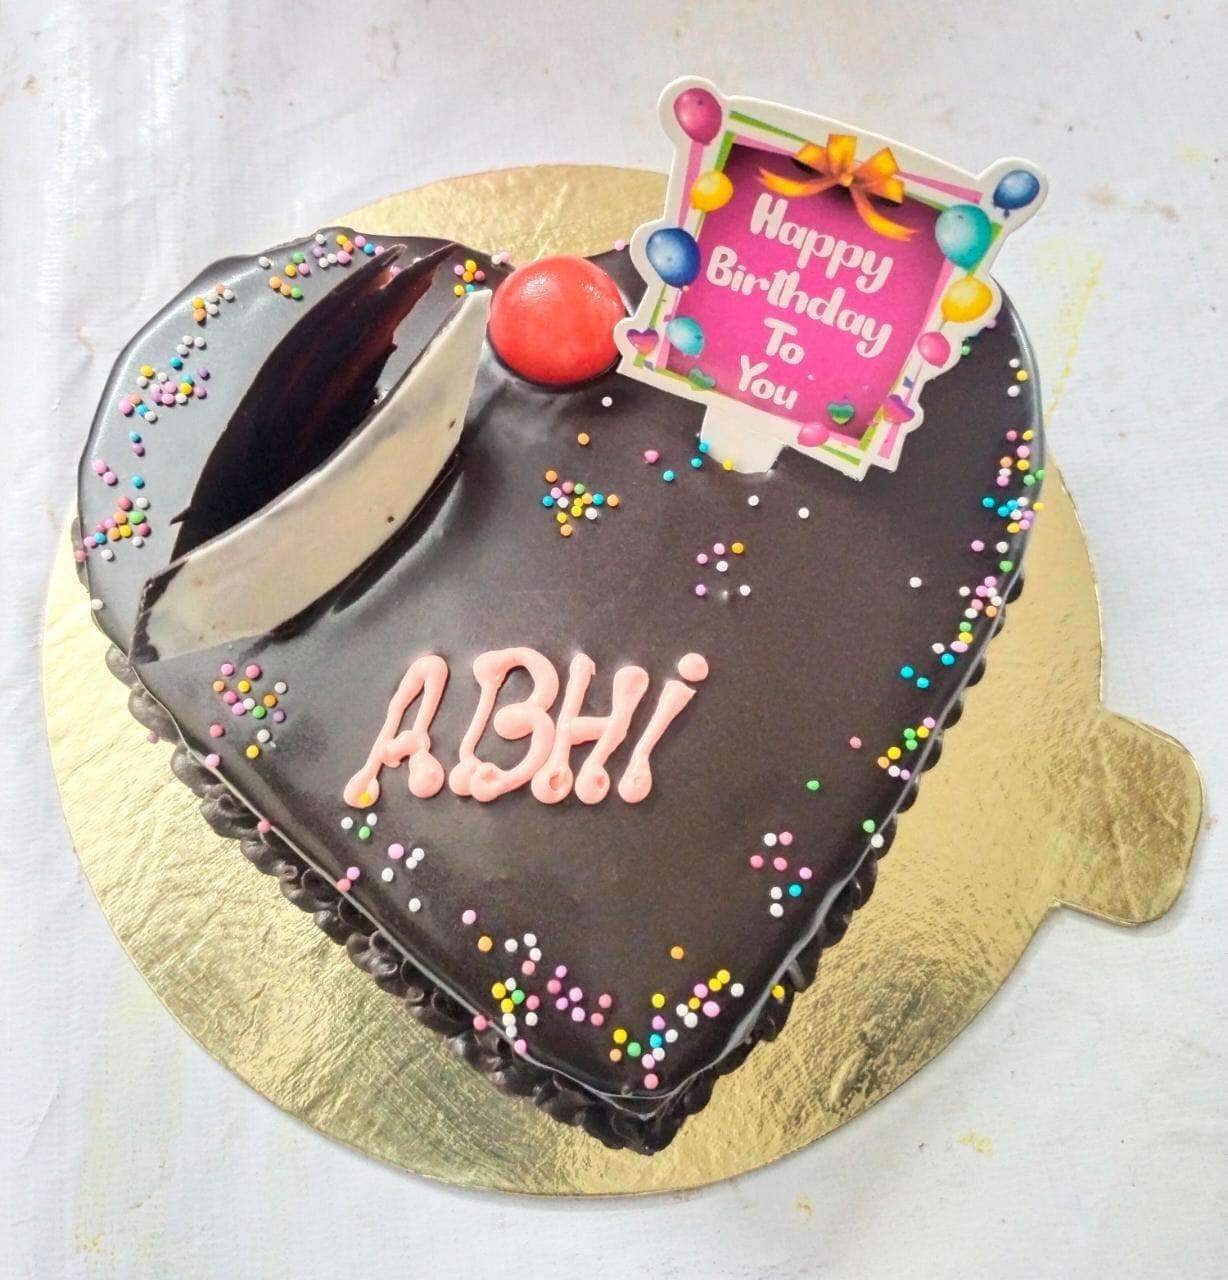 Happy Birthday Abhi Cakes, Cards, Wishes